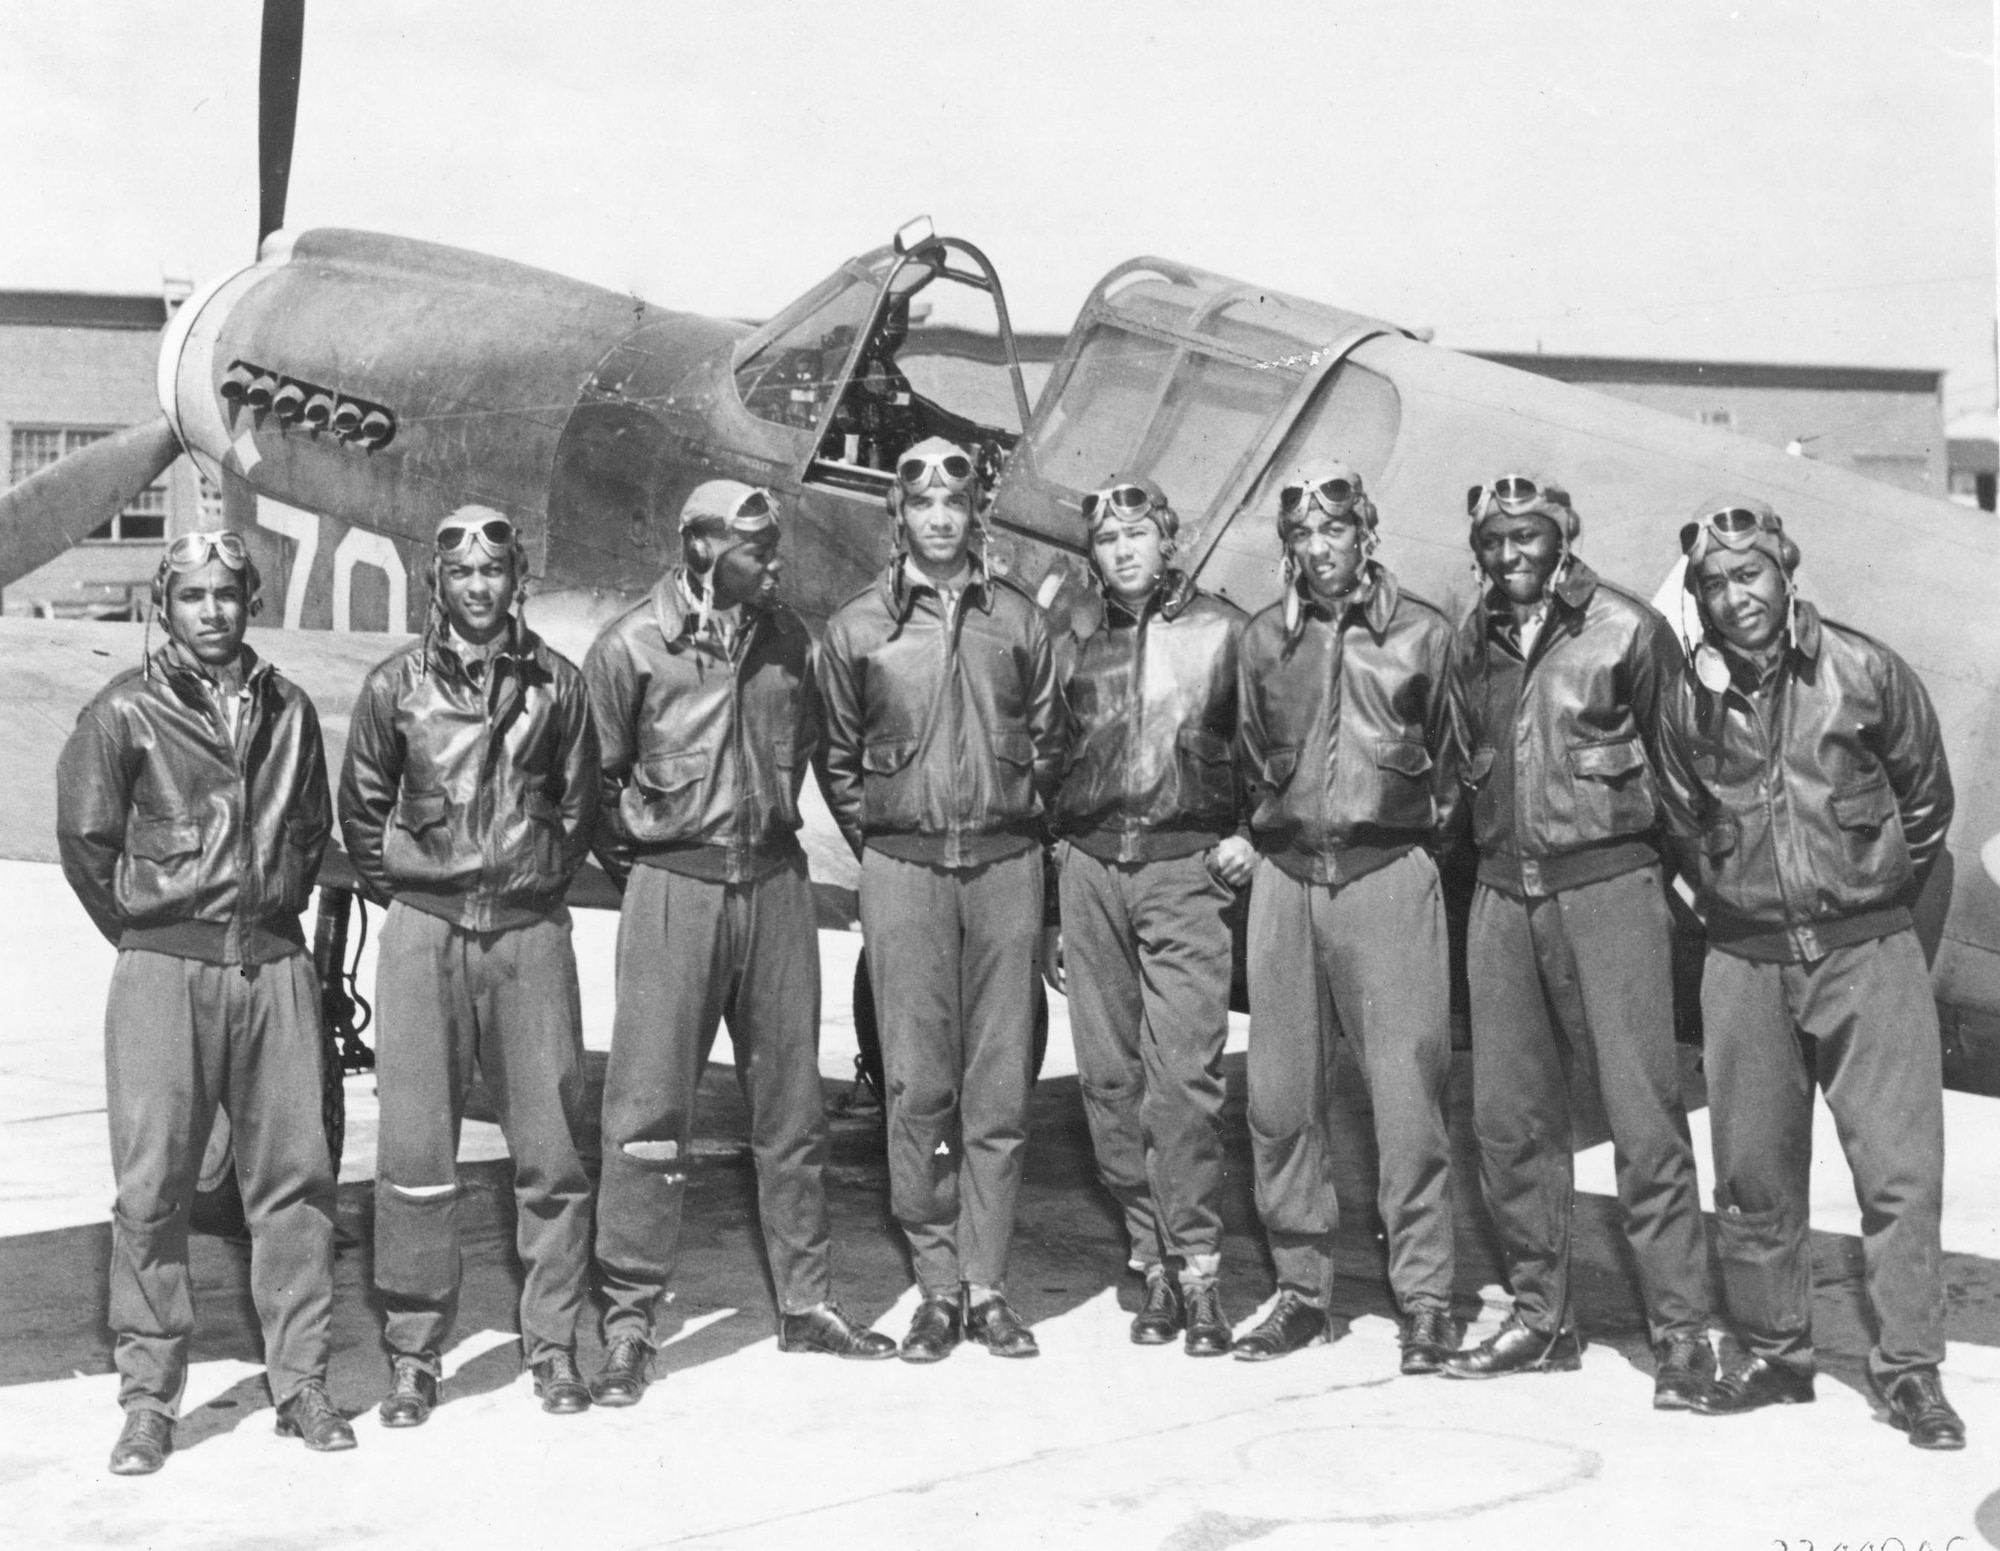 1940's -- The Tuskeegee Airmen